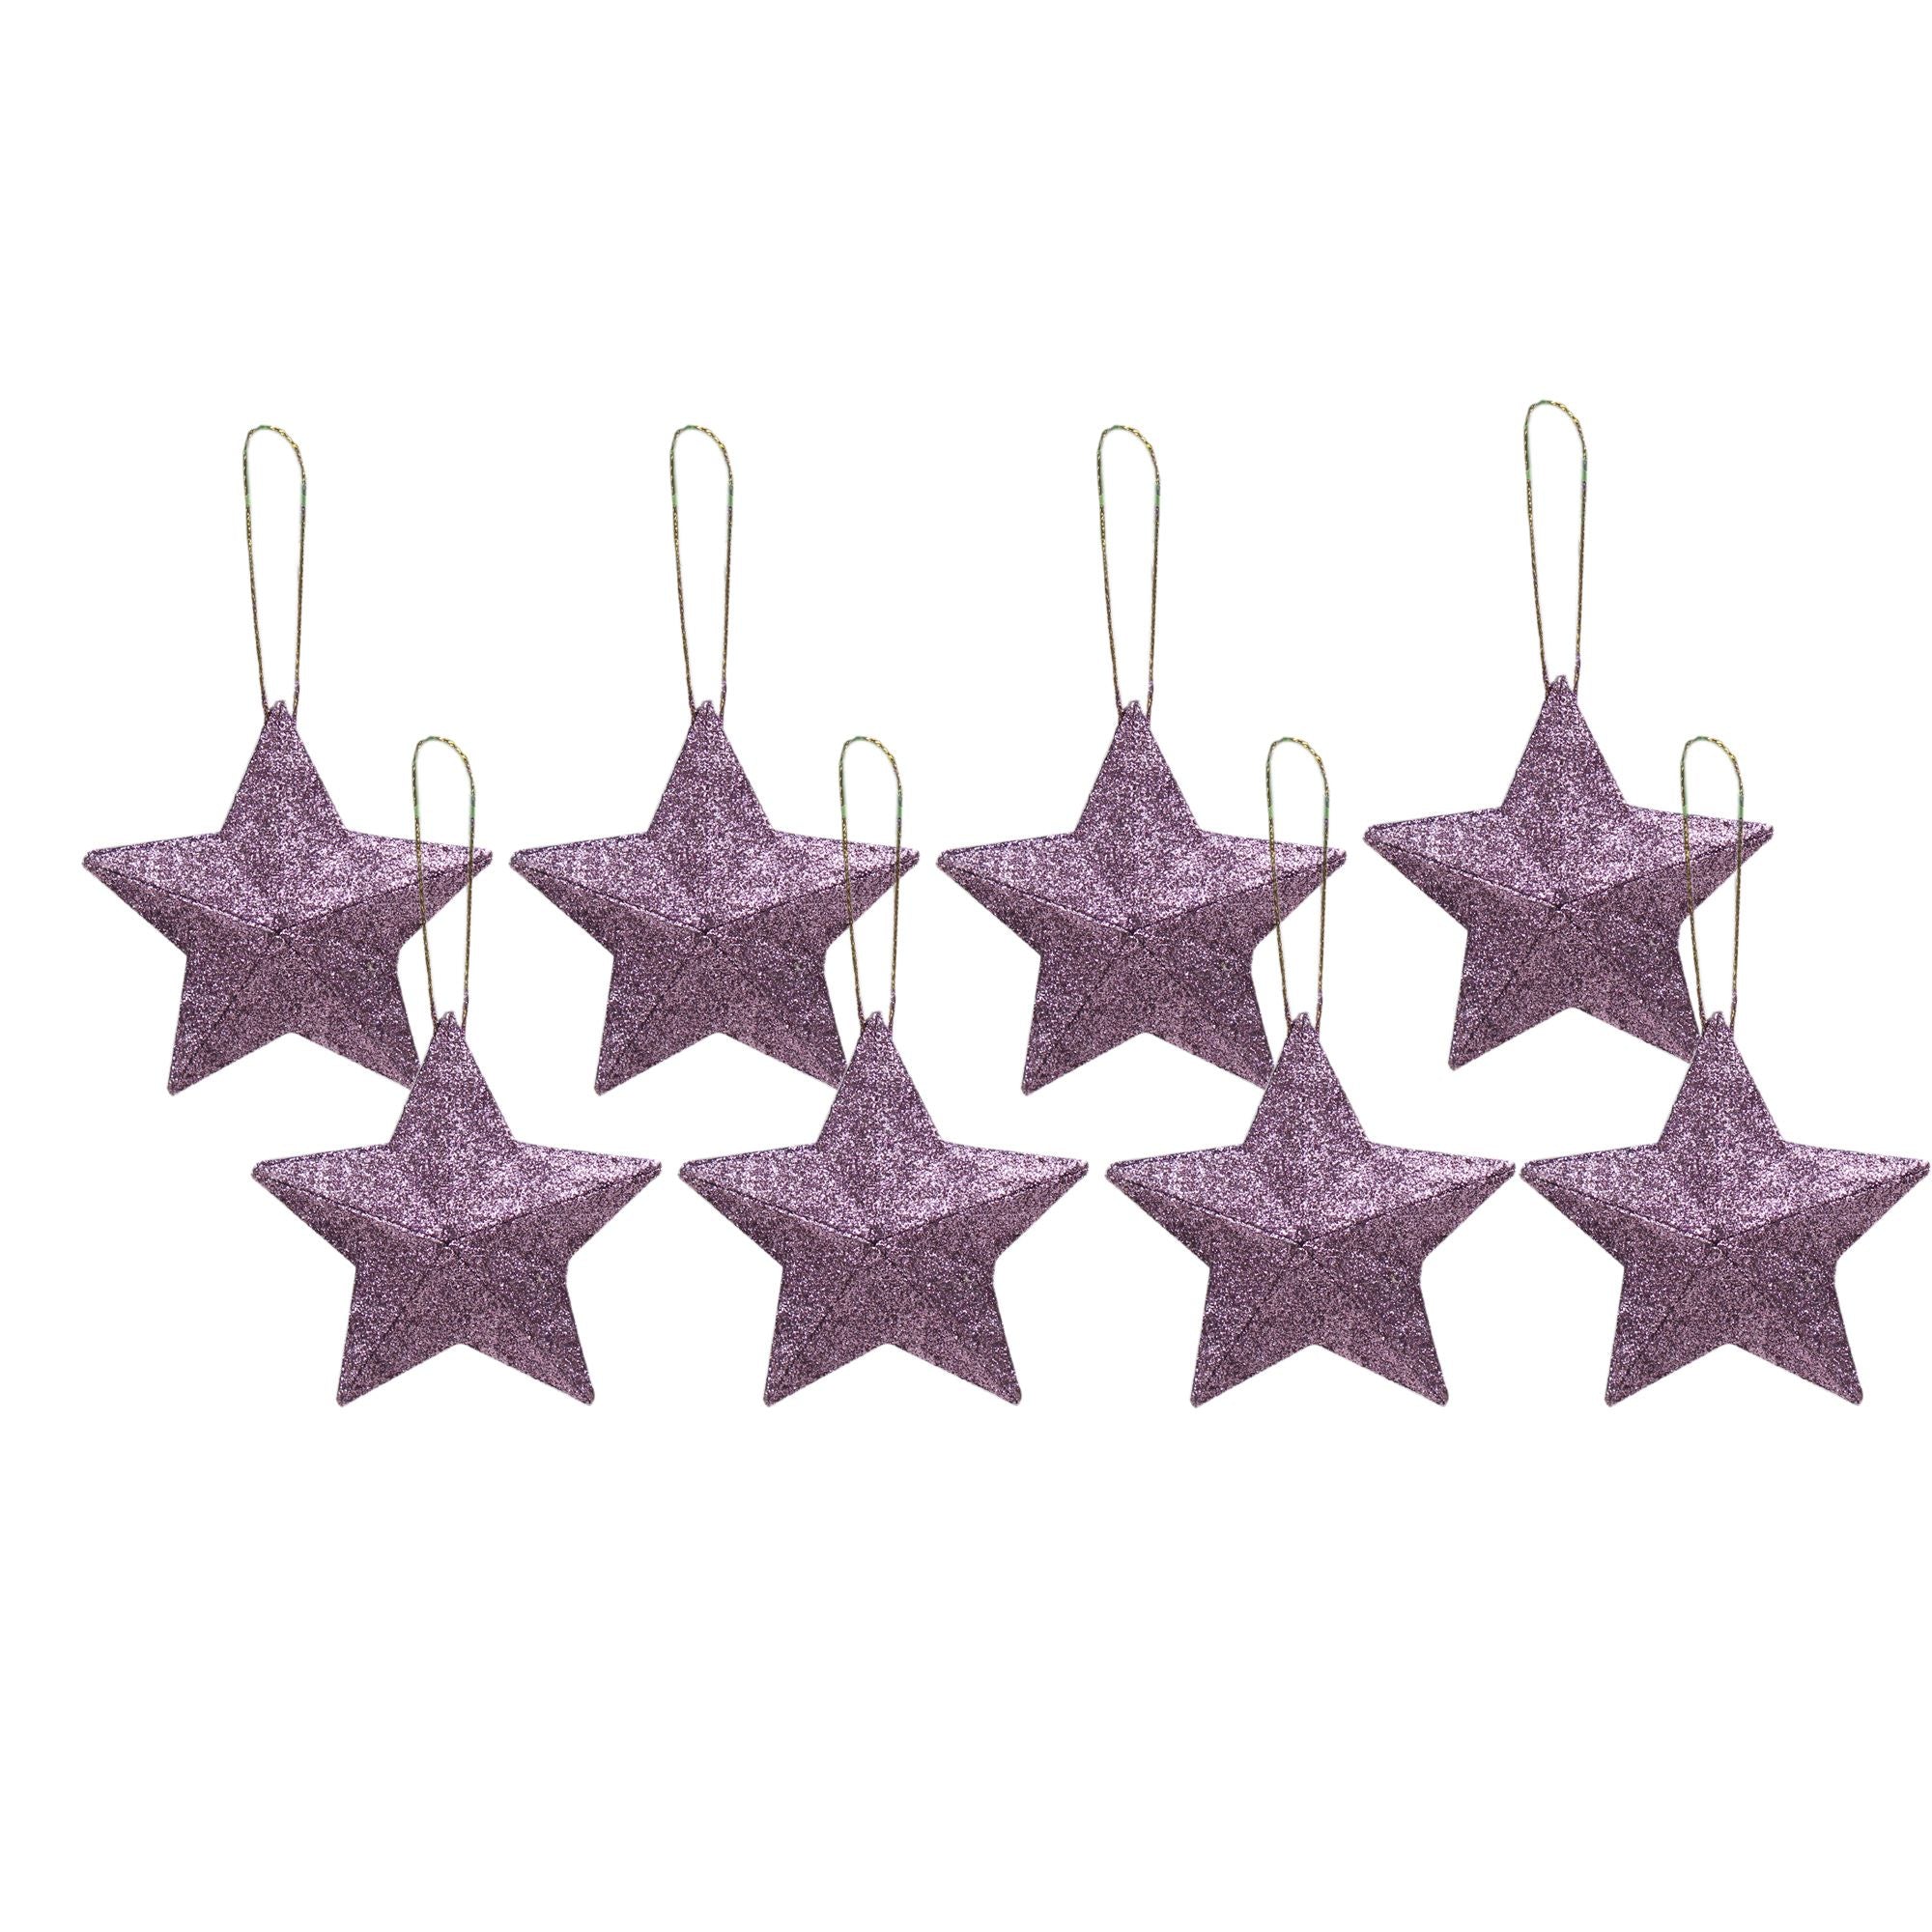 Handmade Christmas Ornaments - 3D Glitter Star s, 2inch, Purple, 8pc